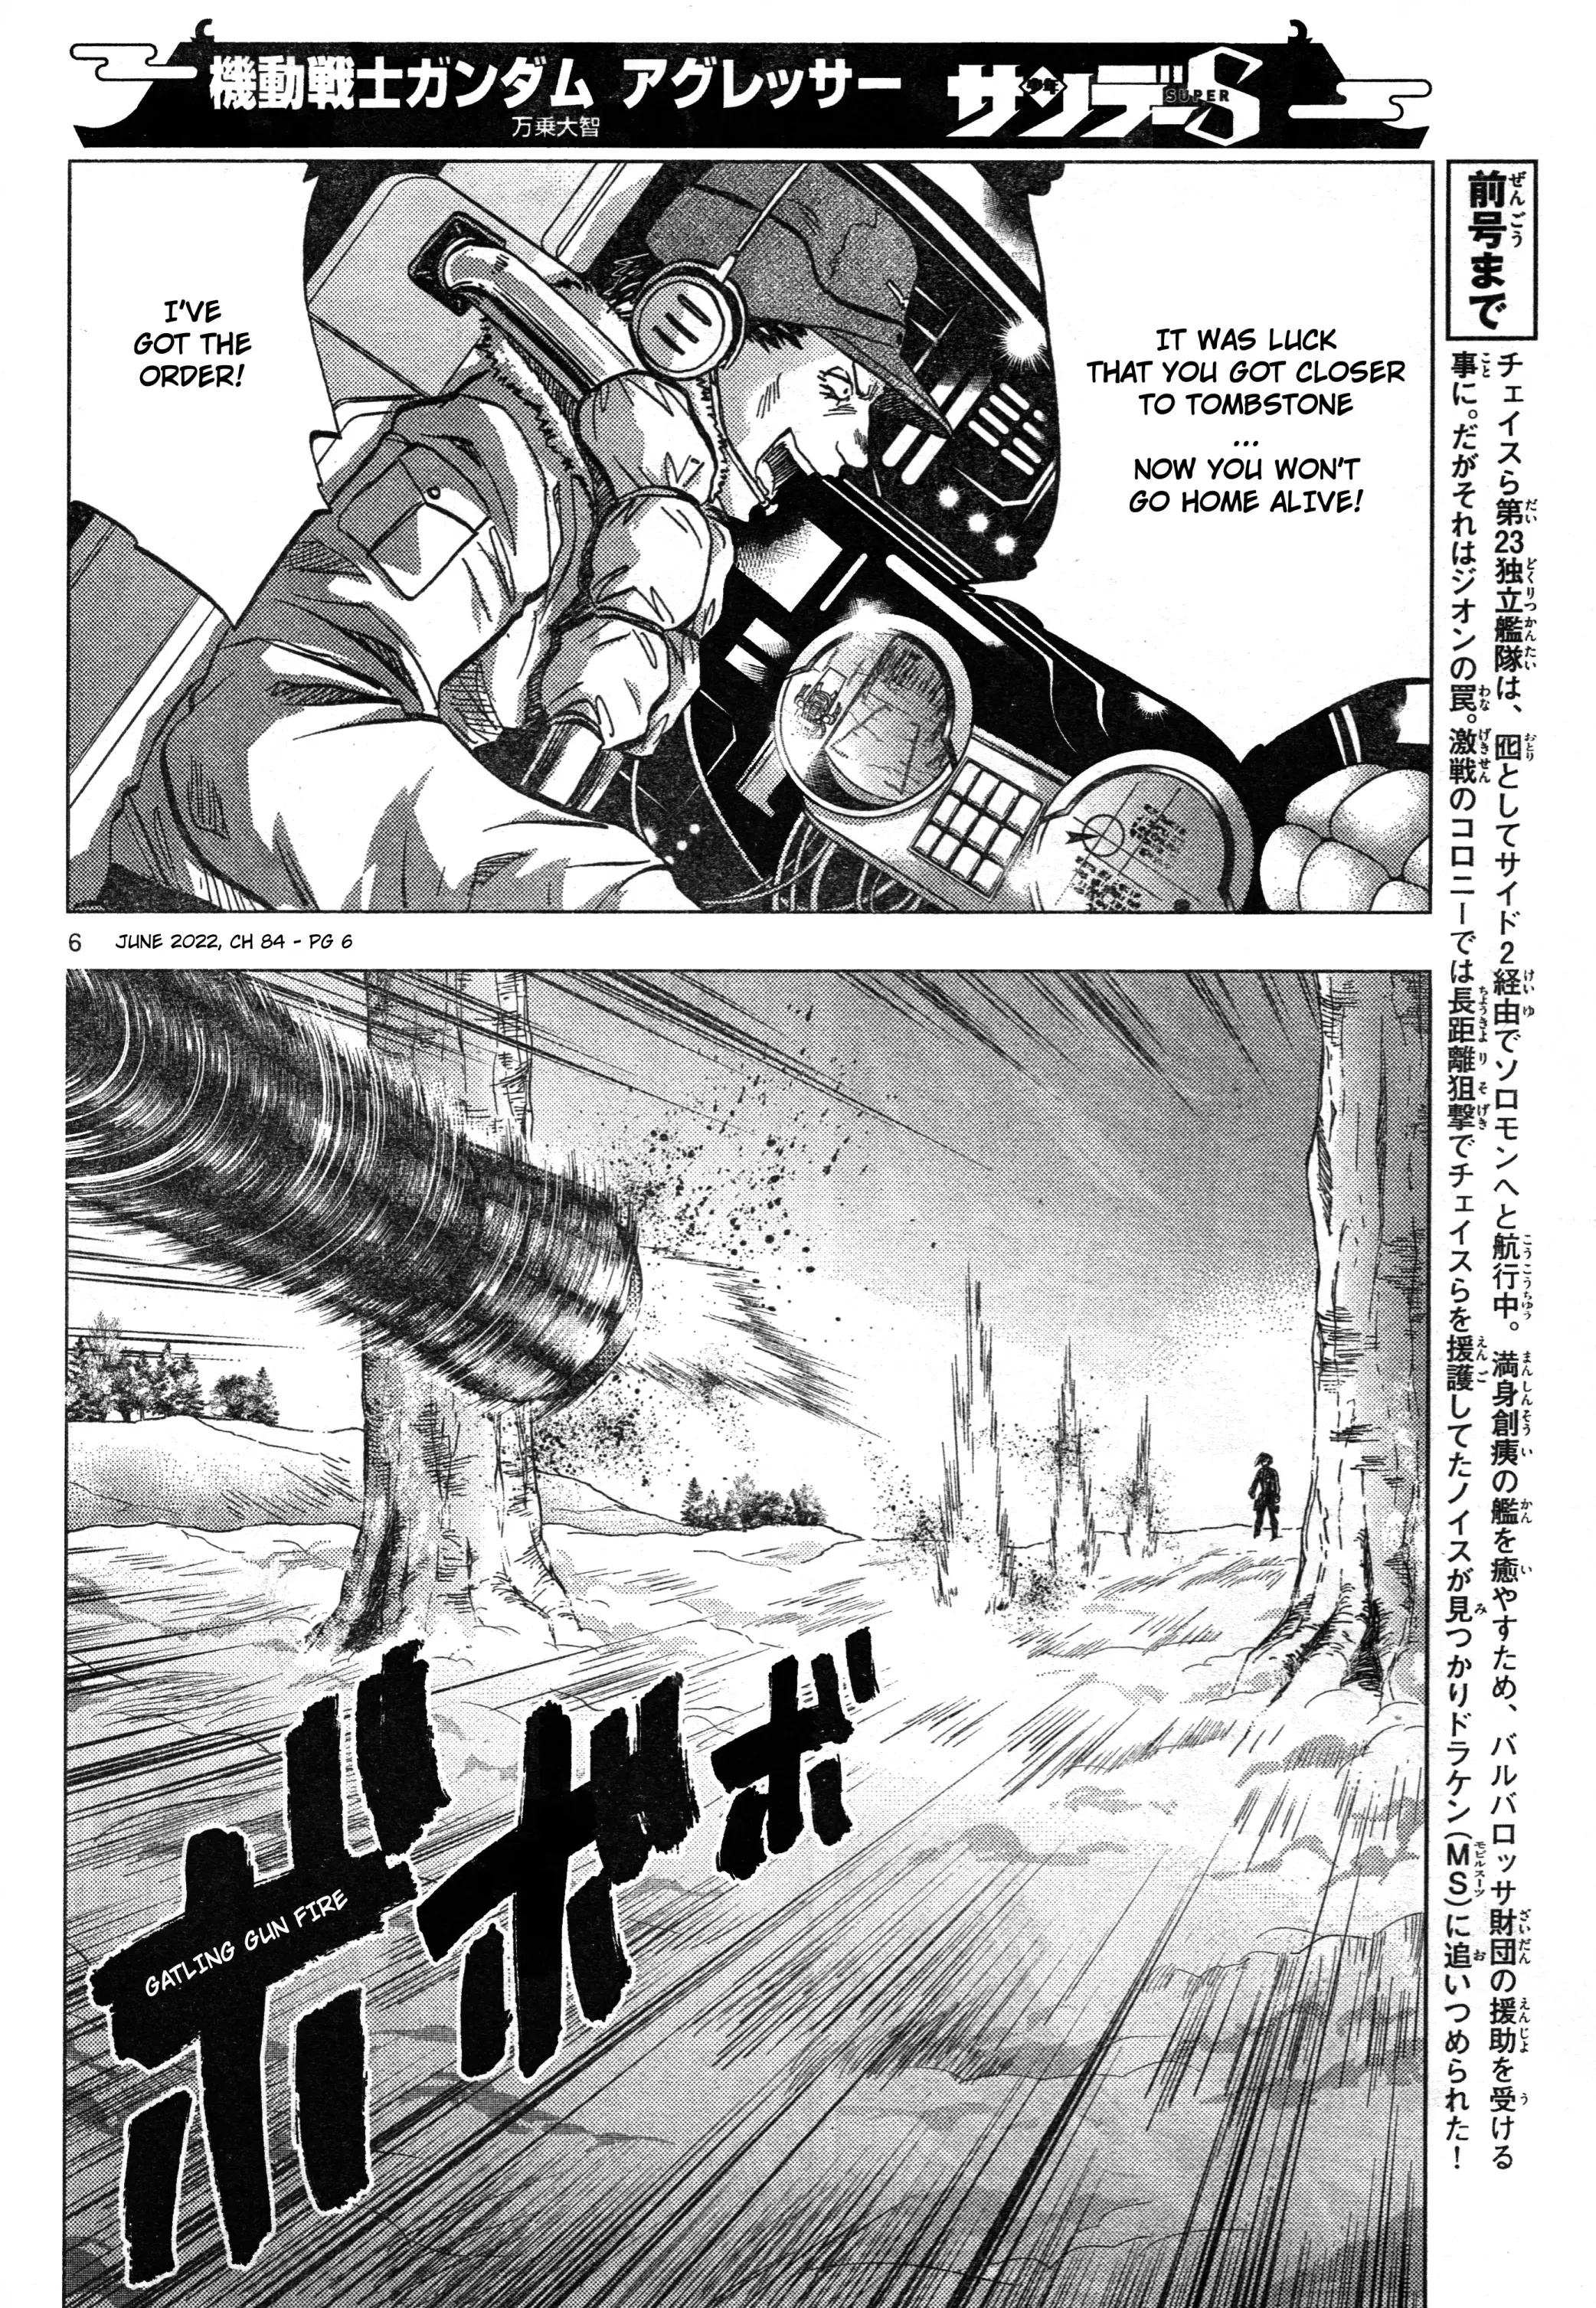 Mobile Suit Gundam Aggressor - 84 page 6-7edb2694